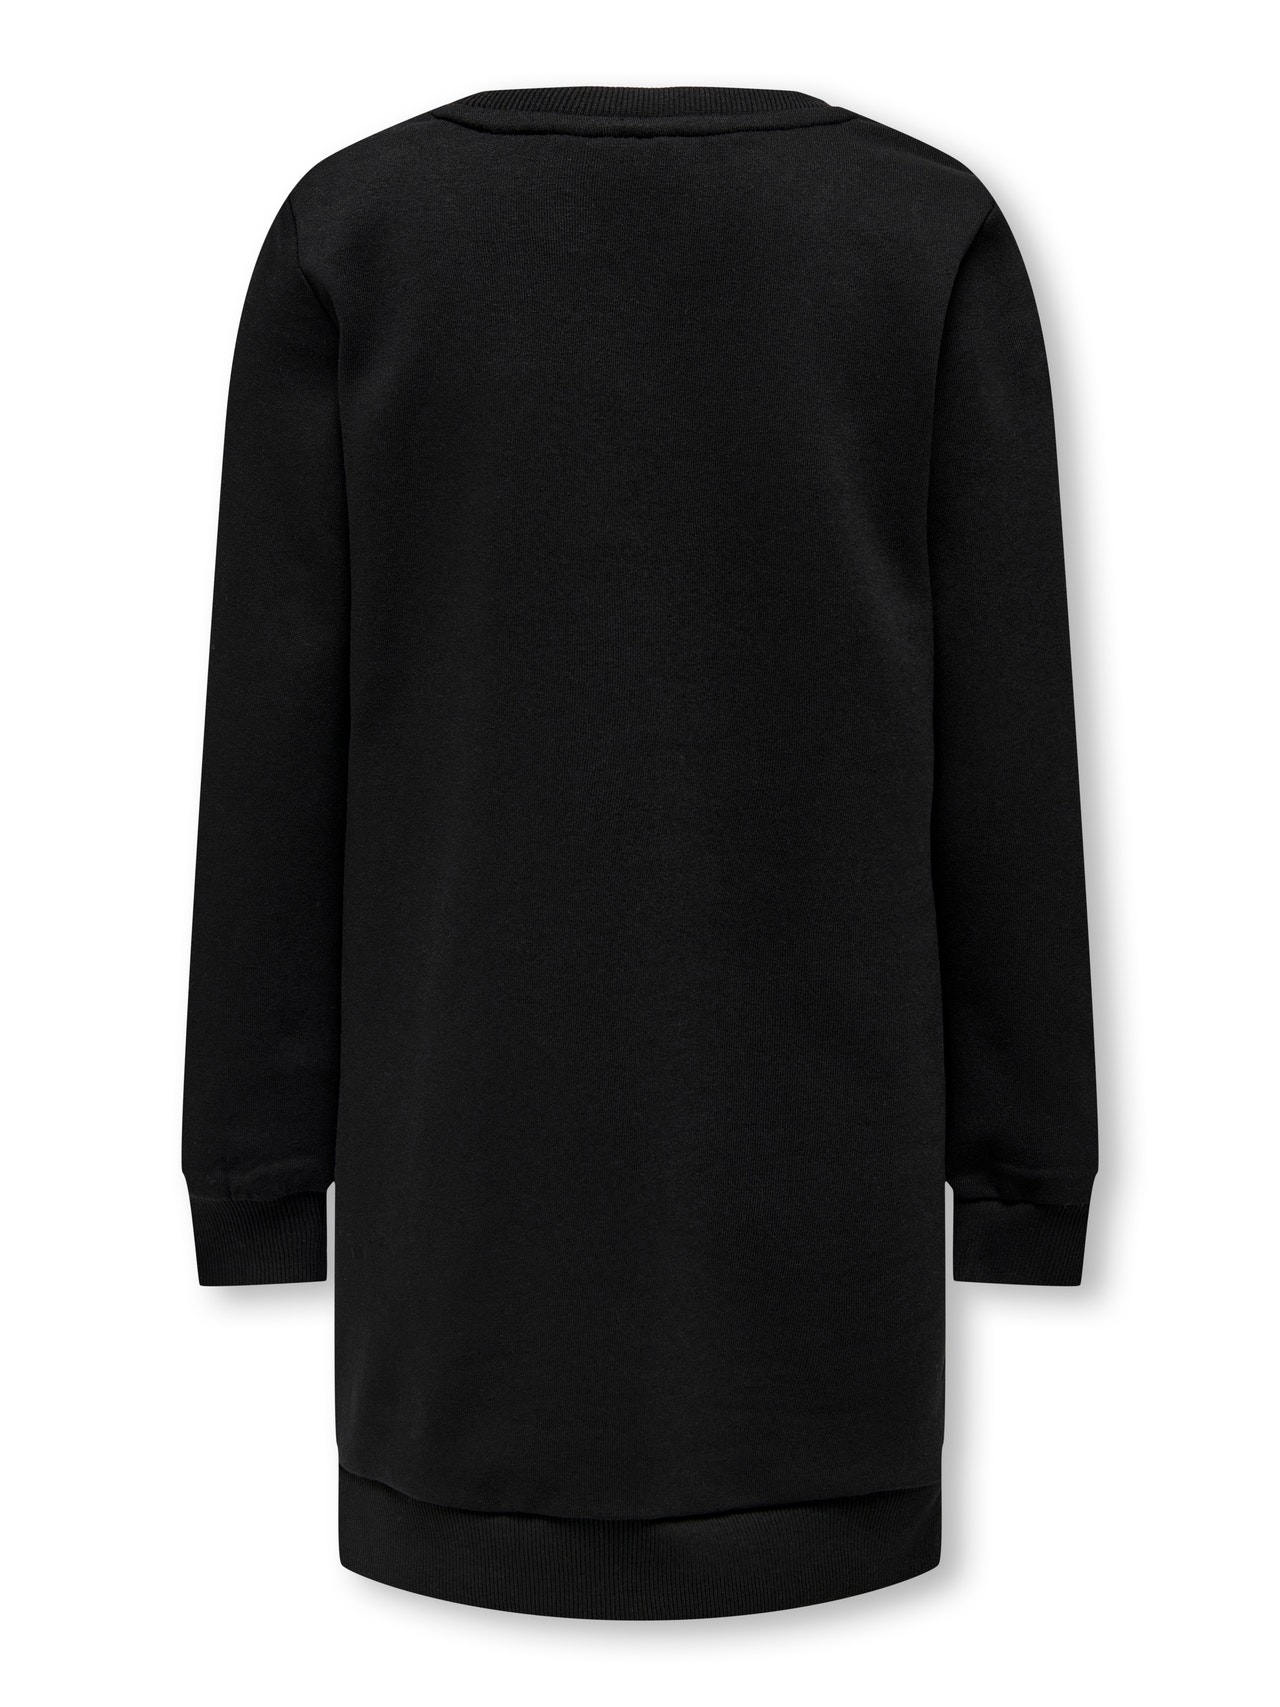 ONLY O-neck sweatshirt dress -Black - 15302801